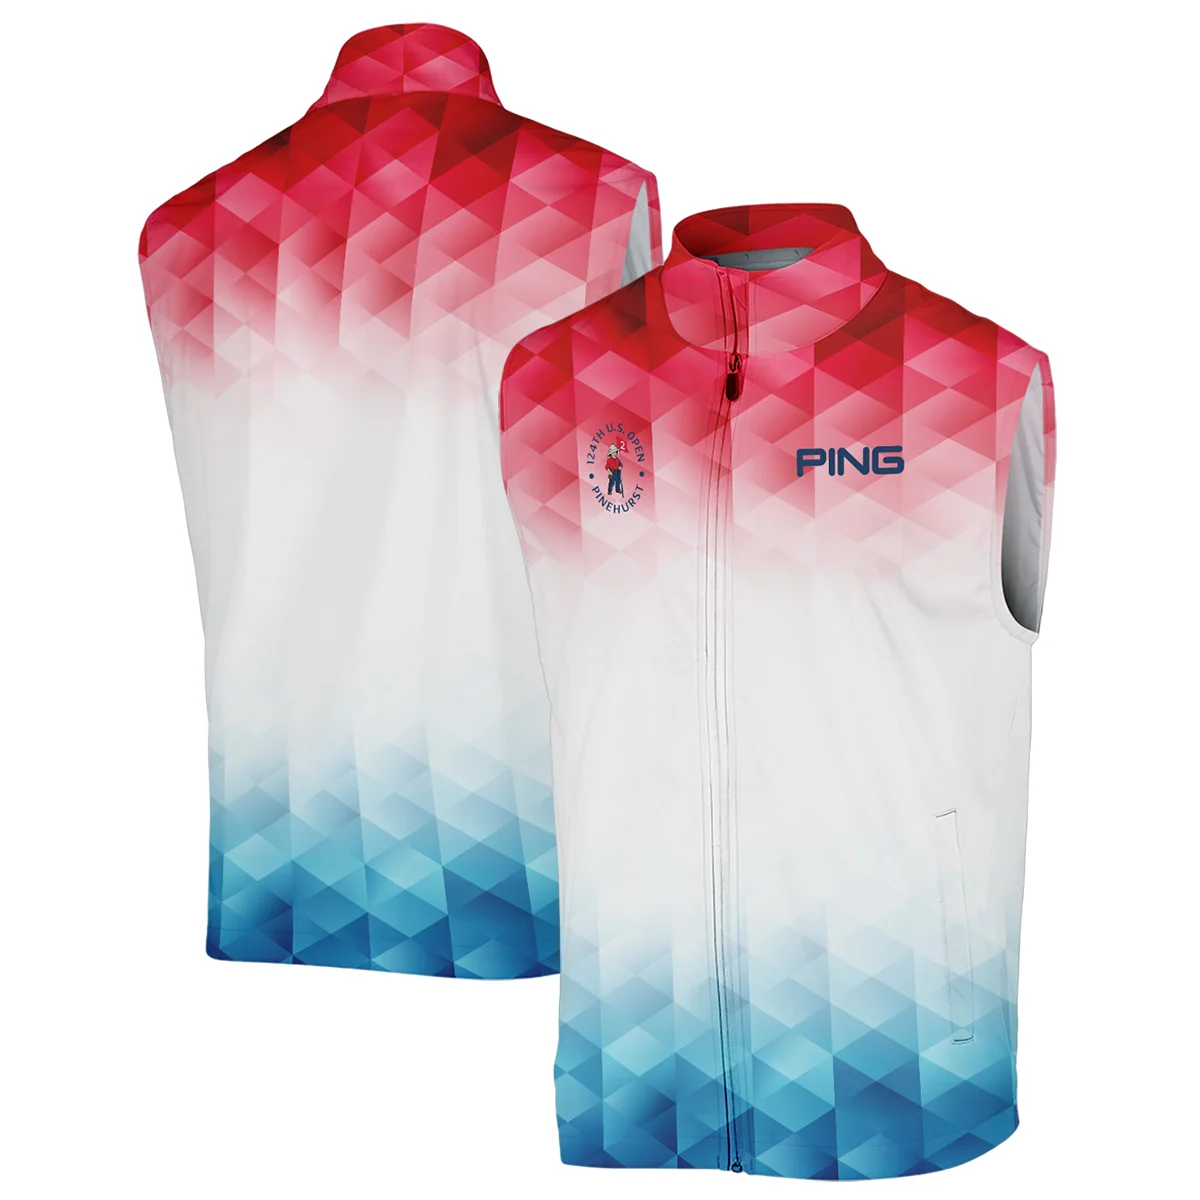 124th U.S. Open Pinehurst Ping Golf Sport Unisex Sweatshirt Blue Red Abstract Geometric Triangles All Over Print Sweatshirt